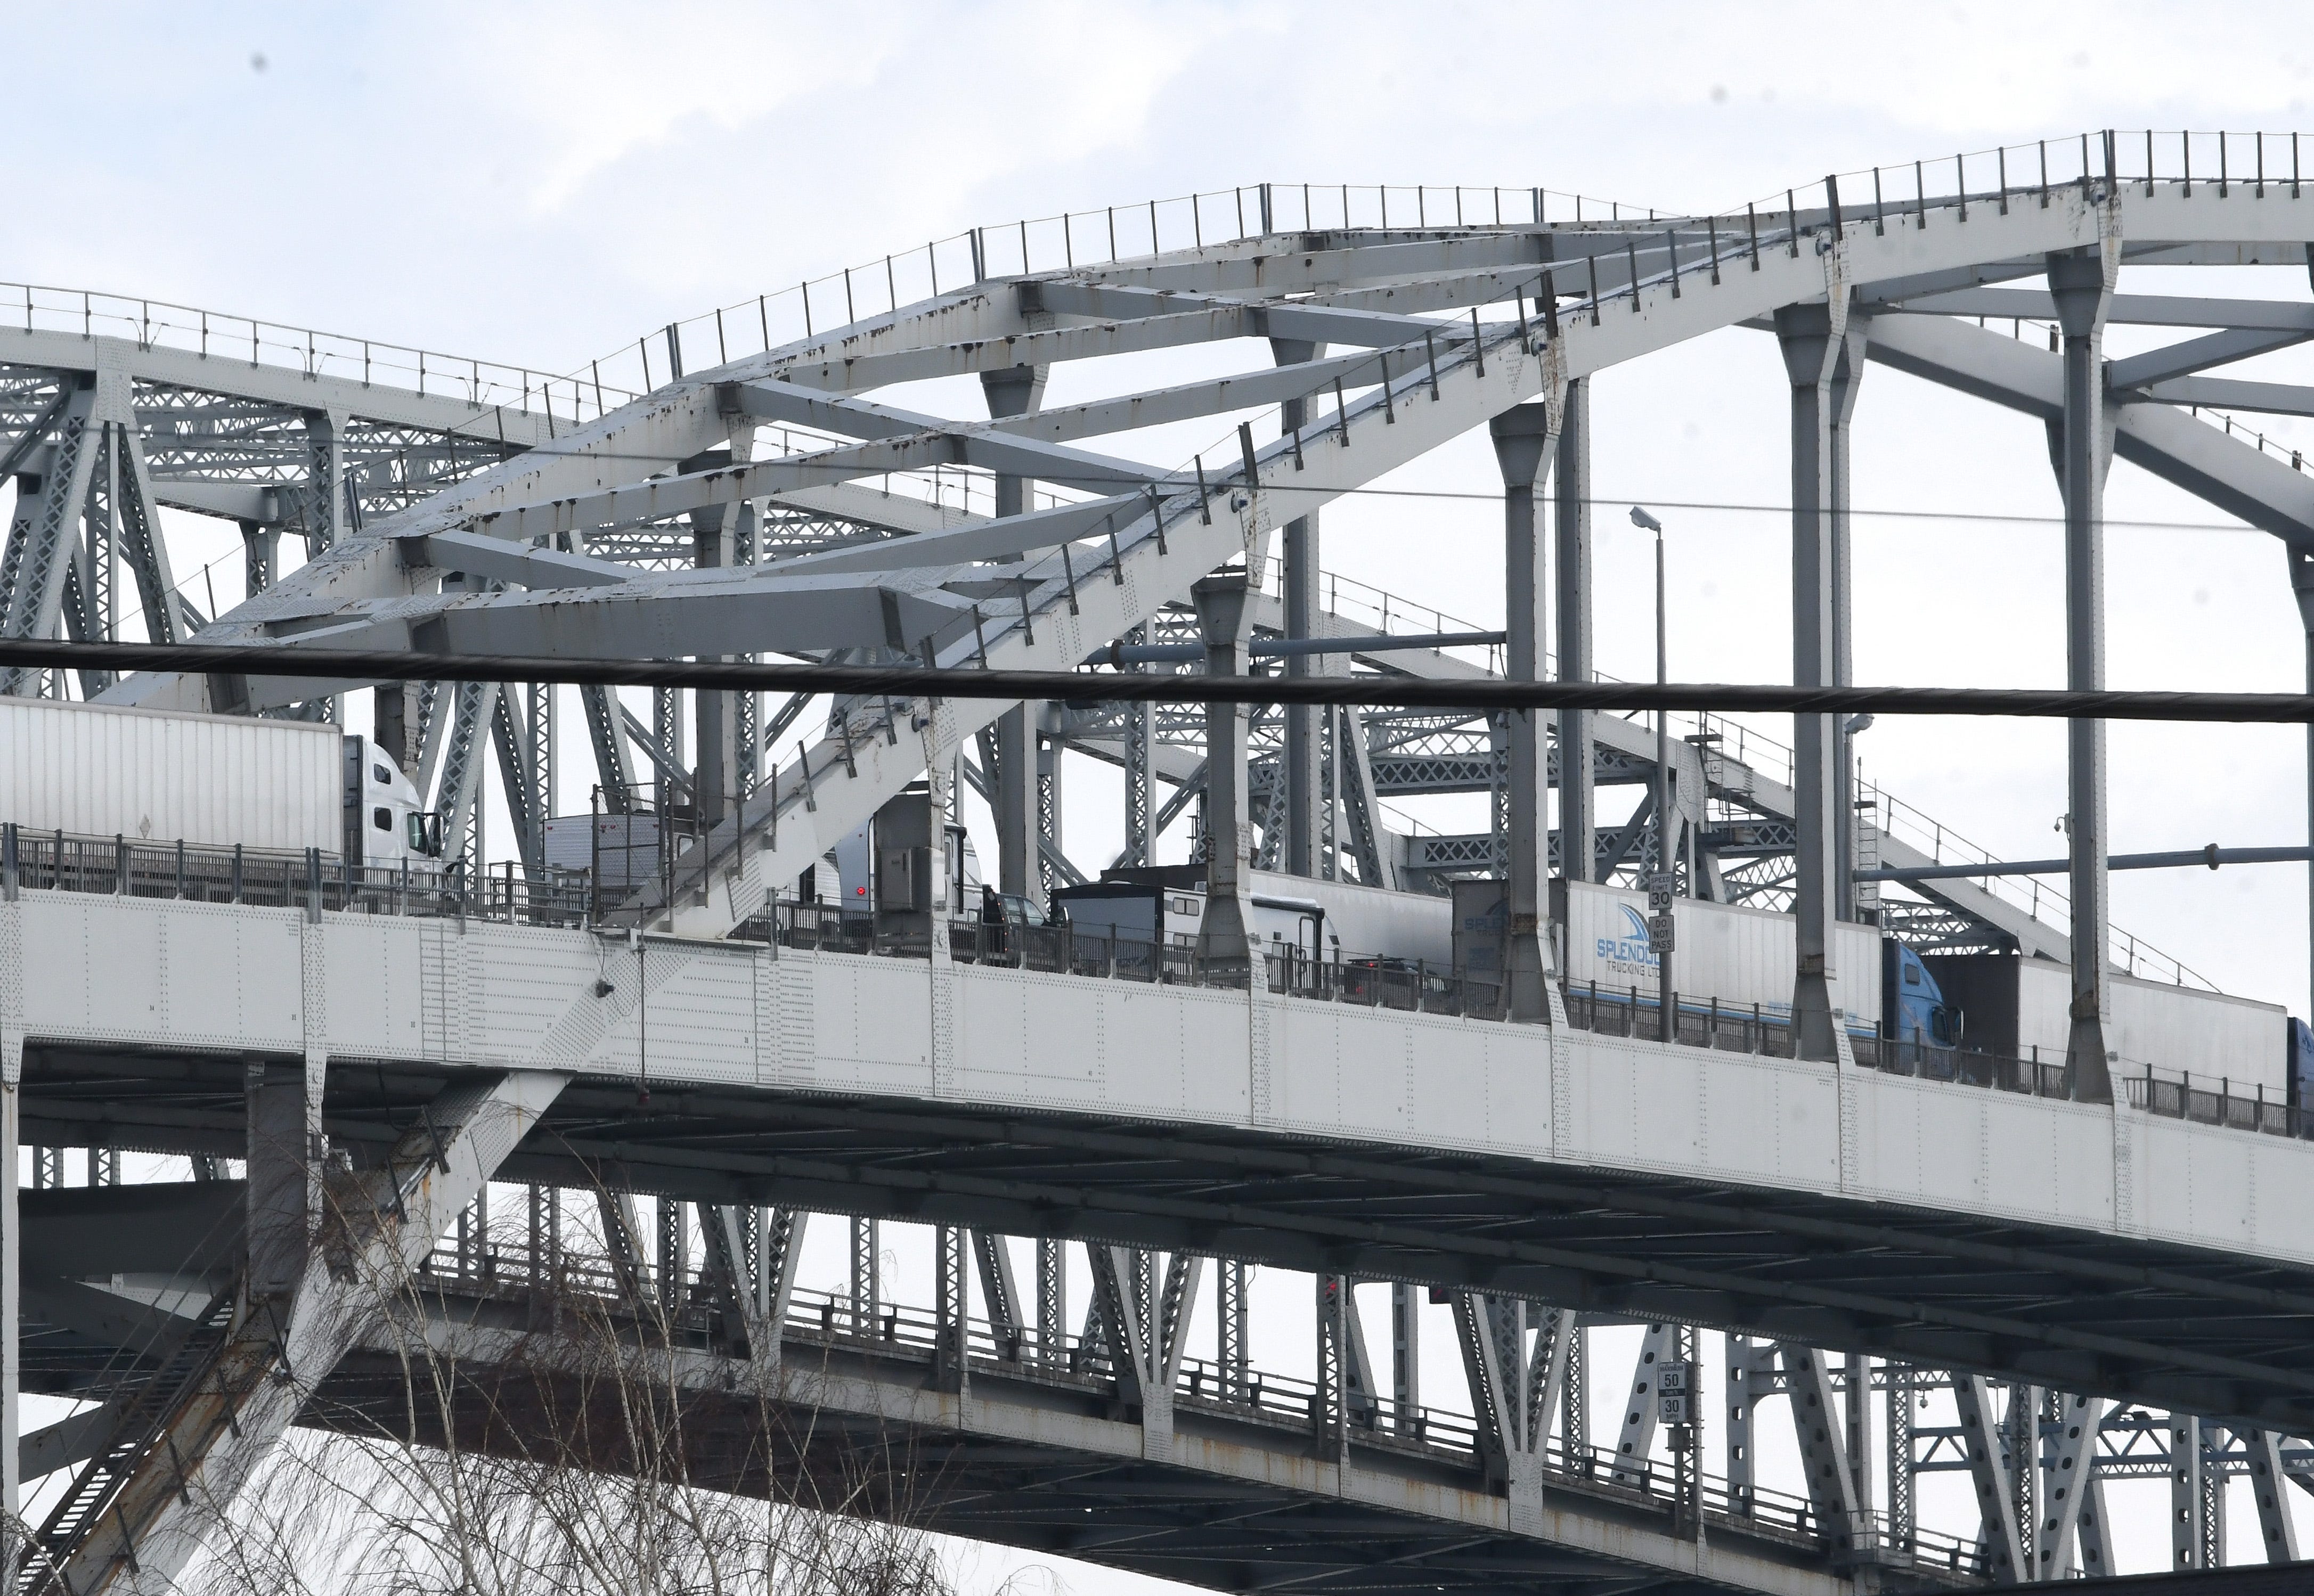 Truck traffic on the Blue Water Bridge in Port Huron, Michigan on February 9, 2022.